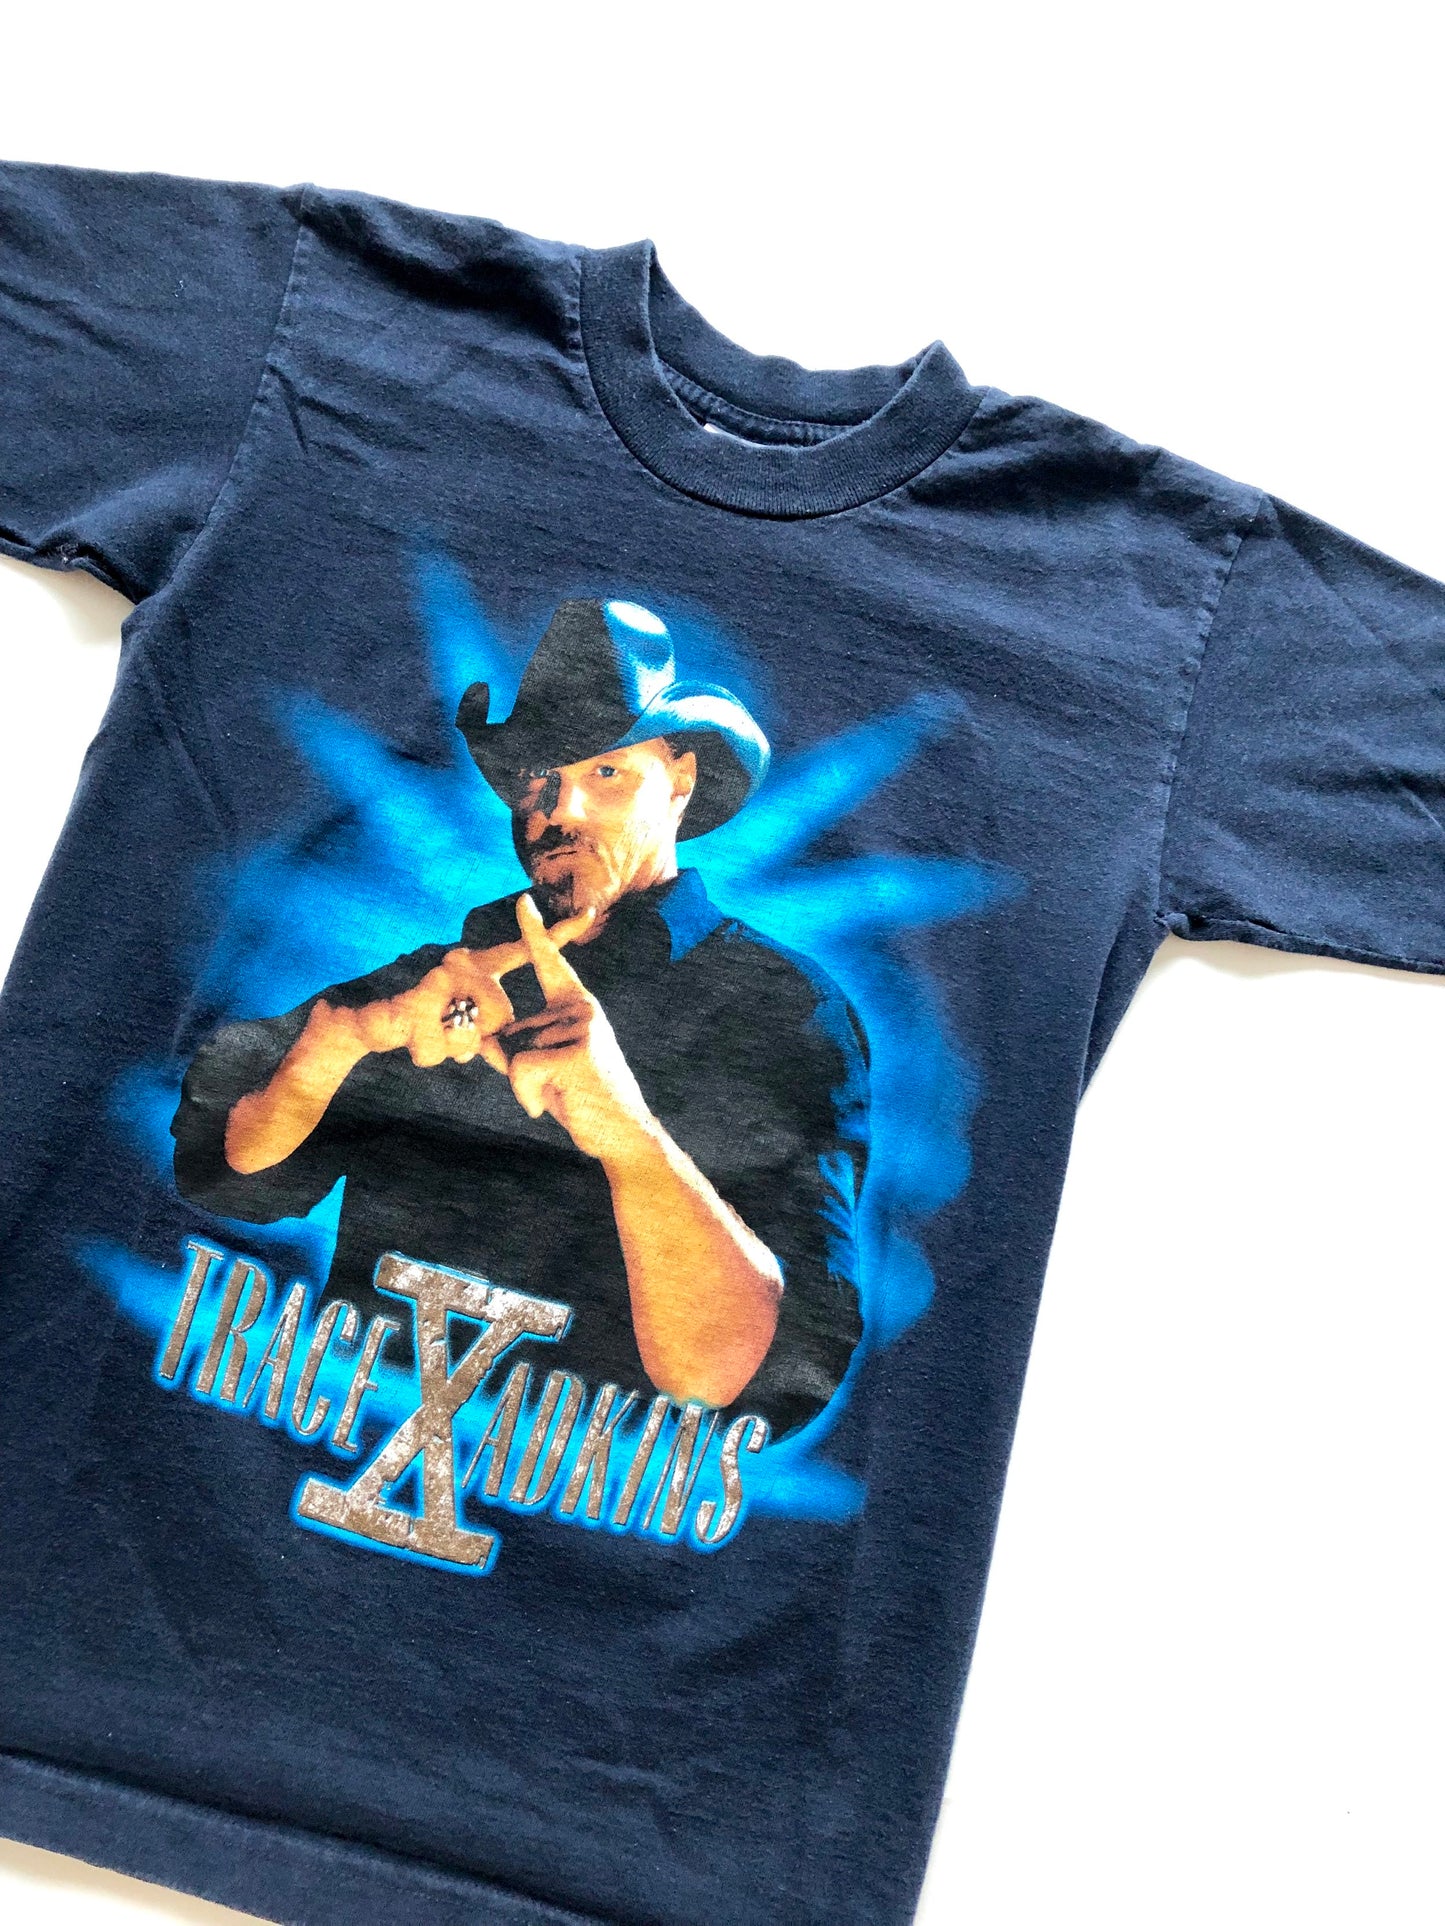 Vintage Trace Adkins Tour T-Shirt USA Made